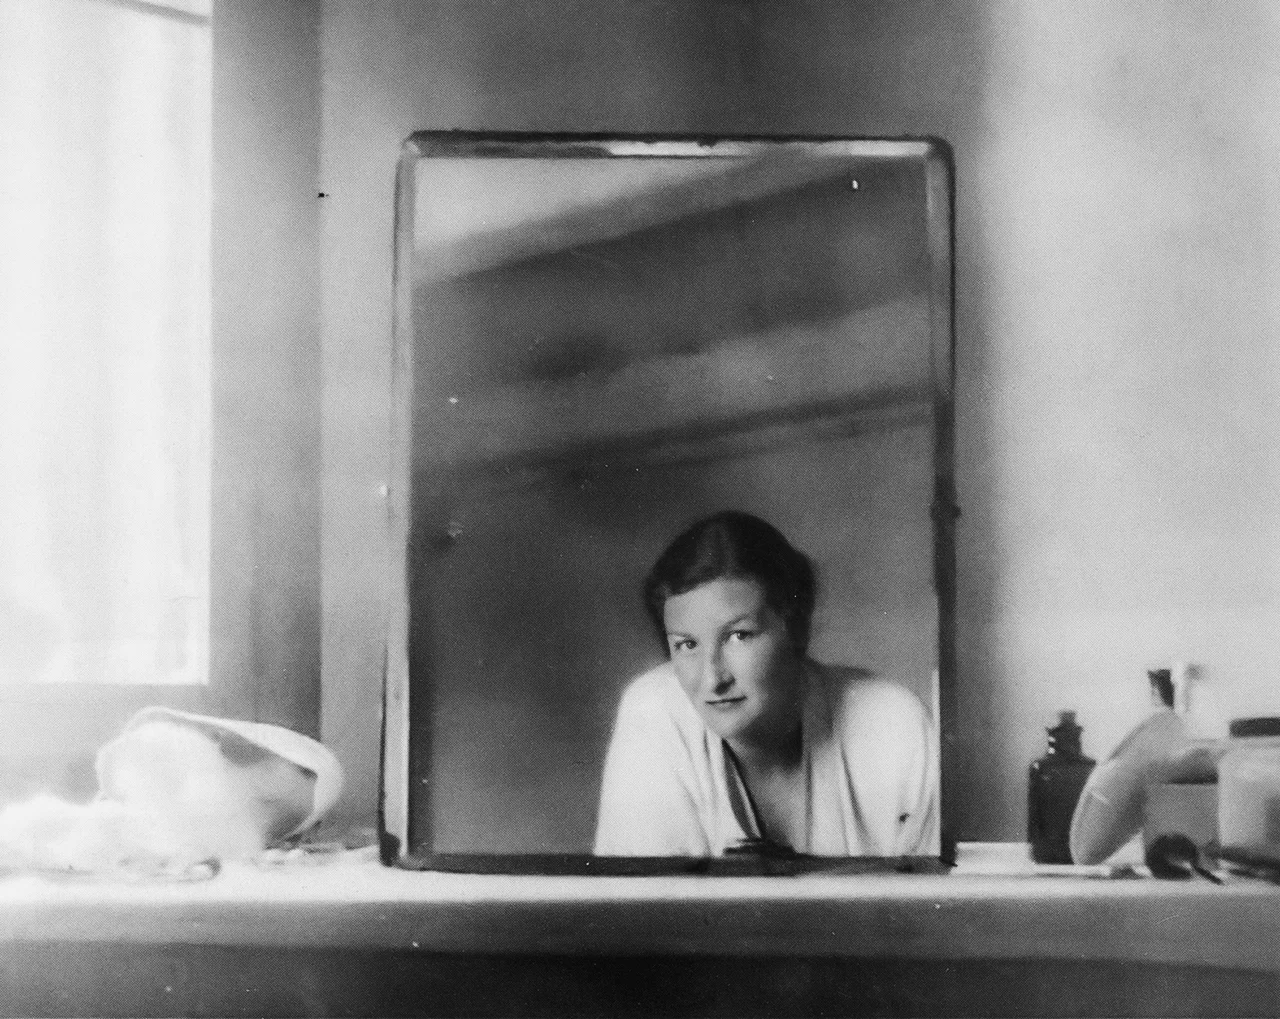 Virginia Hall's vintage mirror selfie